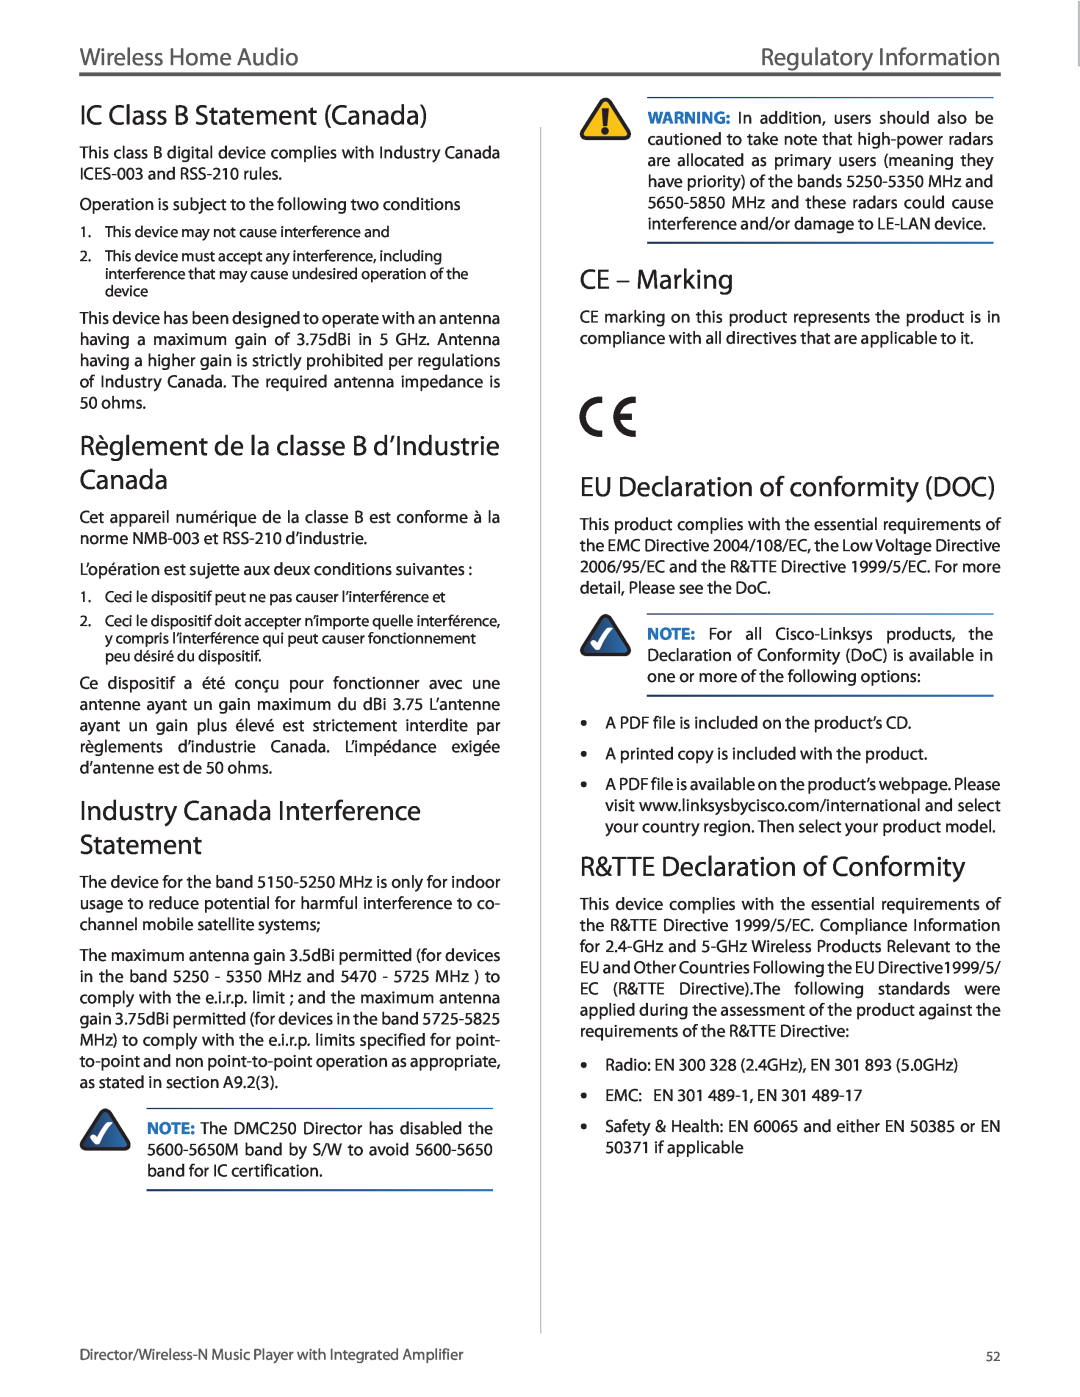 Linksys DMC250 IC Class B Statement Canada, Règlement de la classe B d’Industrie Canada, CE – Marking, Wireless Home Audio 